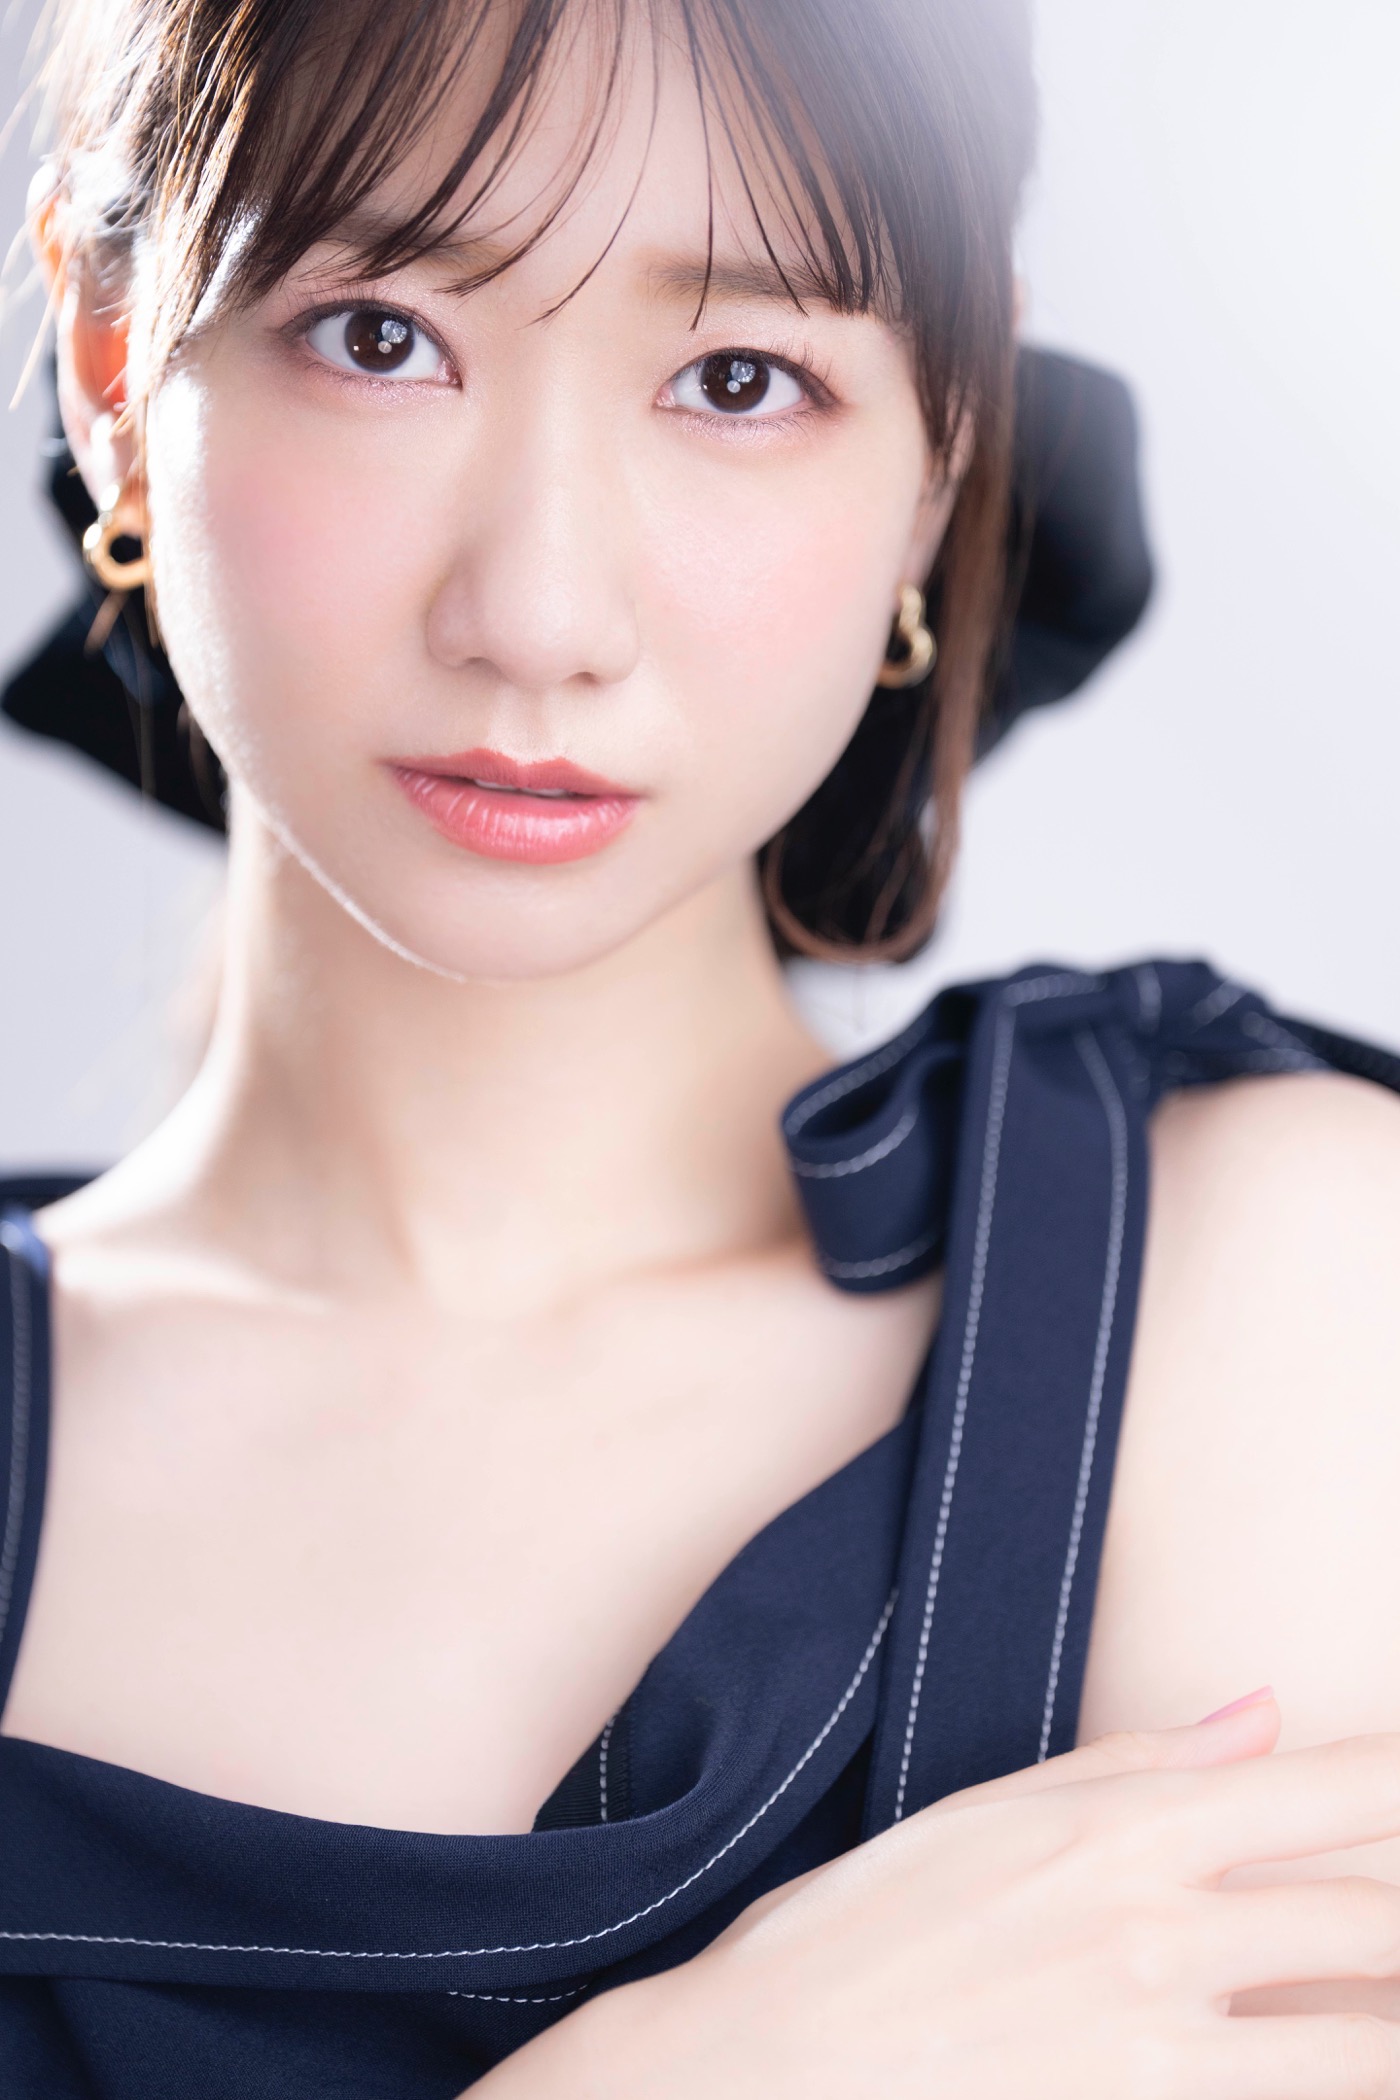 AKB48柏木由紀、自身がプロデュースするコスメ「upink」のアイシャドウ新色登場にコメント - 画像一覧（2/5）